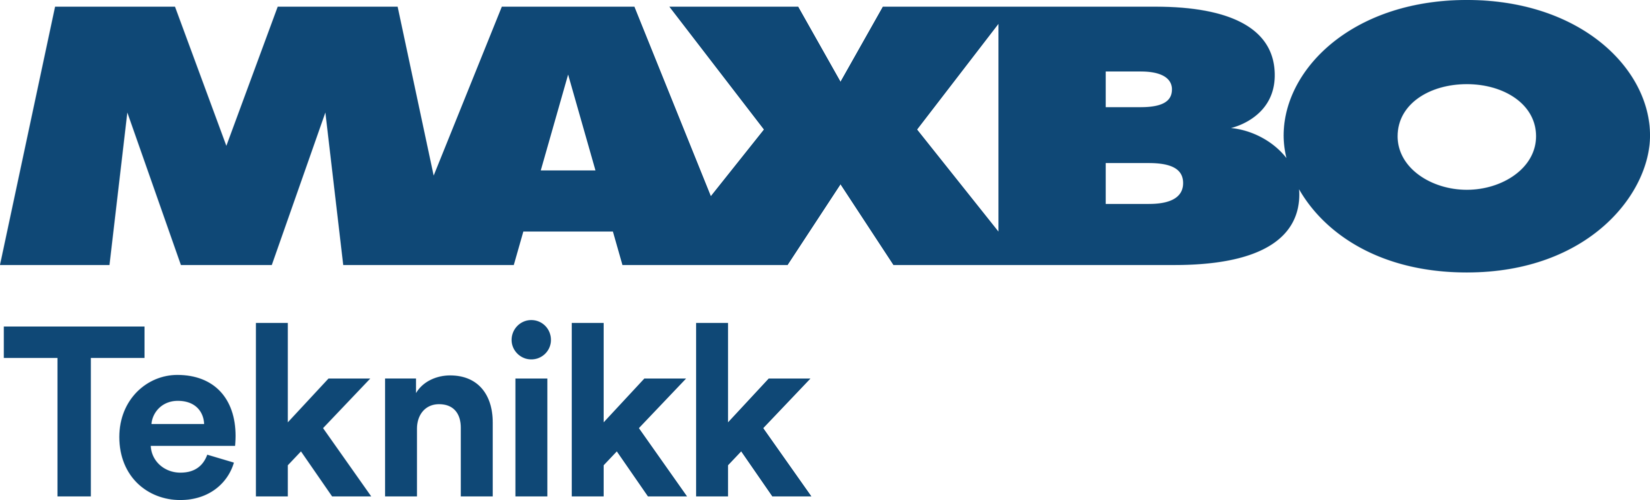 Logo til Maxbo Teknikk